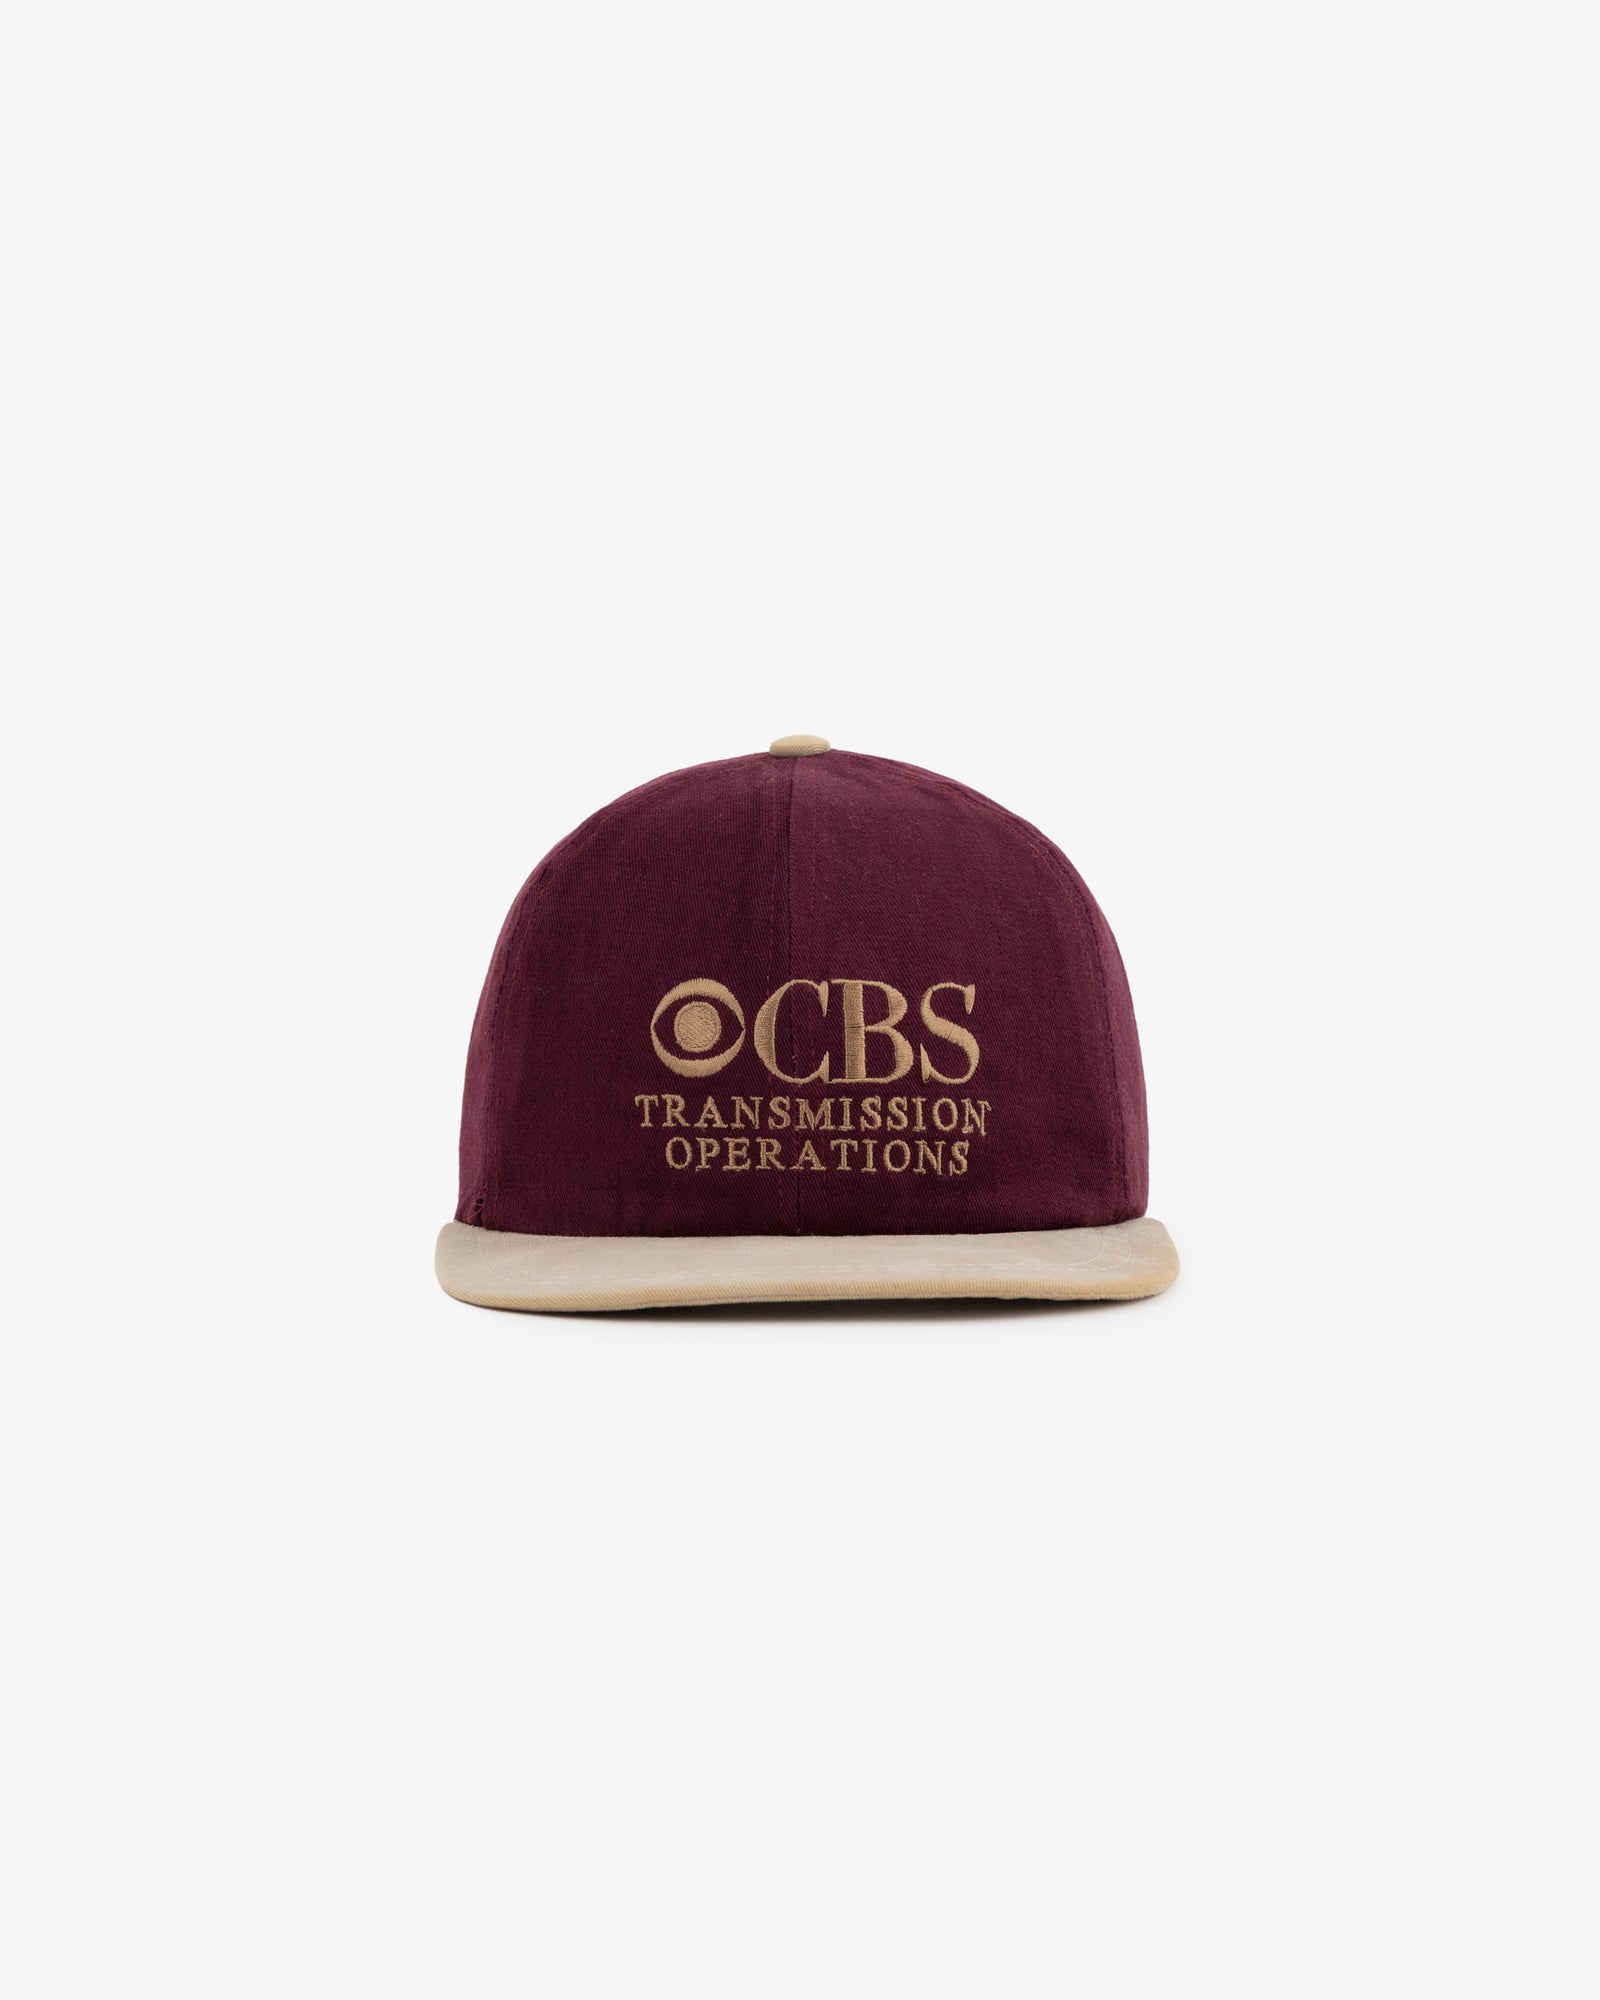 Vintage CBS Hat